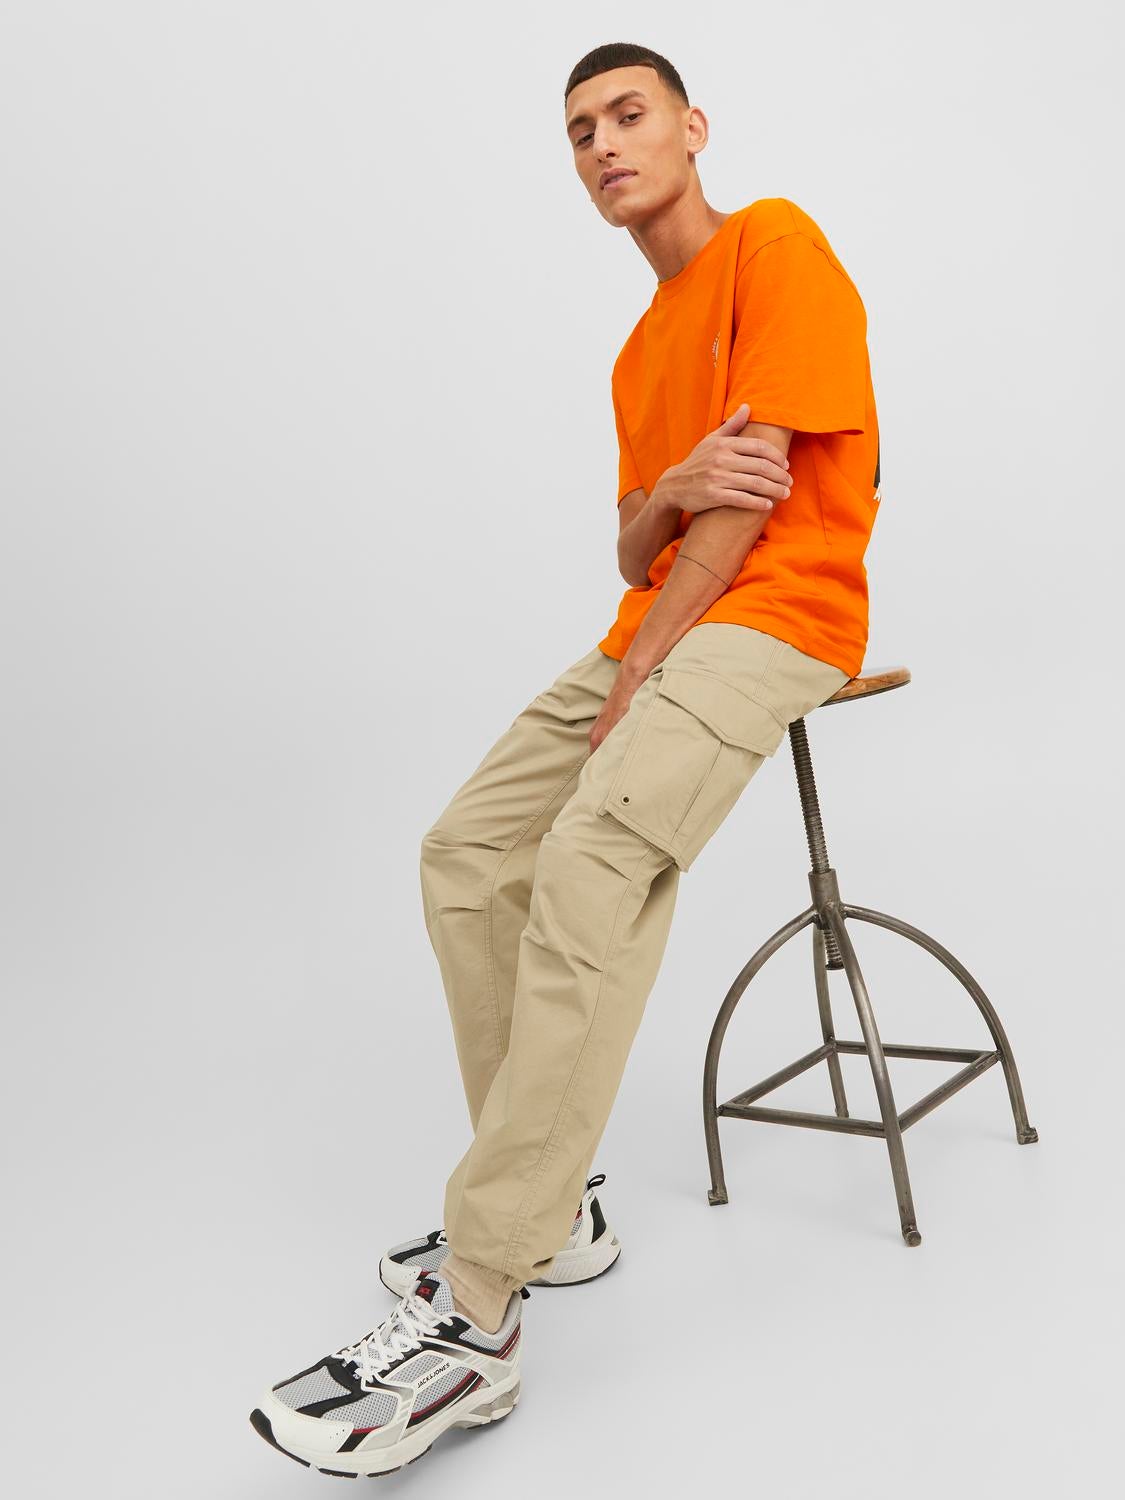 Leo Yelland CT03 Lightweight Hi-Vis Orange Cargo Trousers - redoakdirect.com